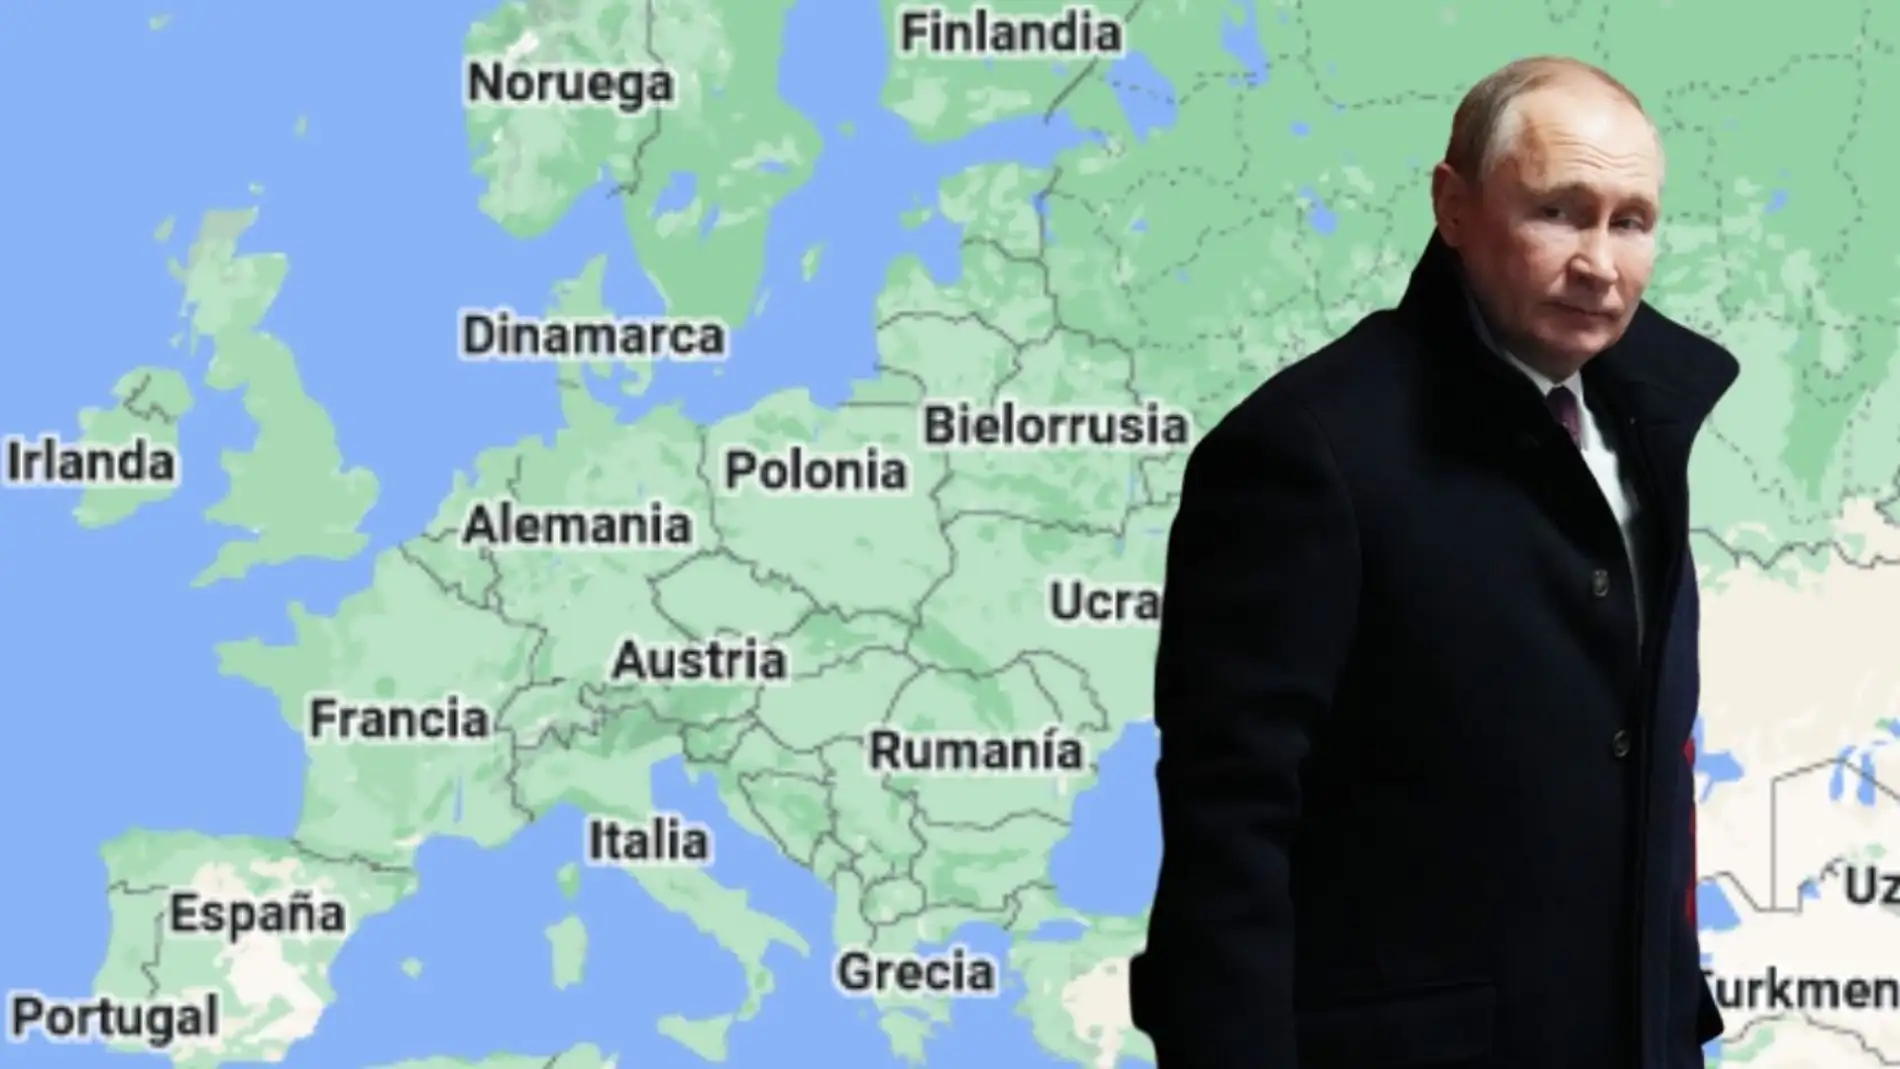 Foto Putin: Carl Court / Getty Images | Foto mapa: Google Maps | Montaje: Onda Cero